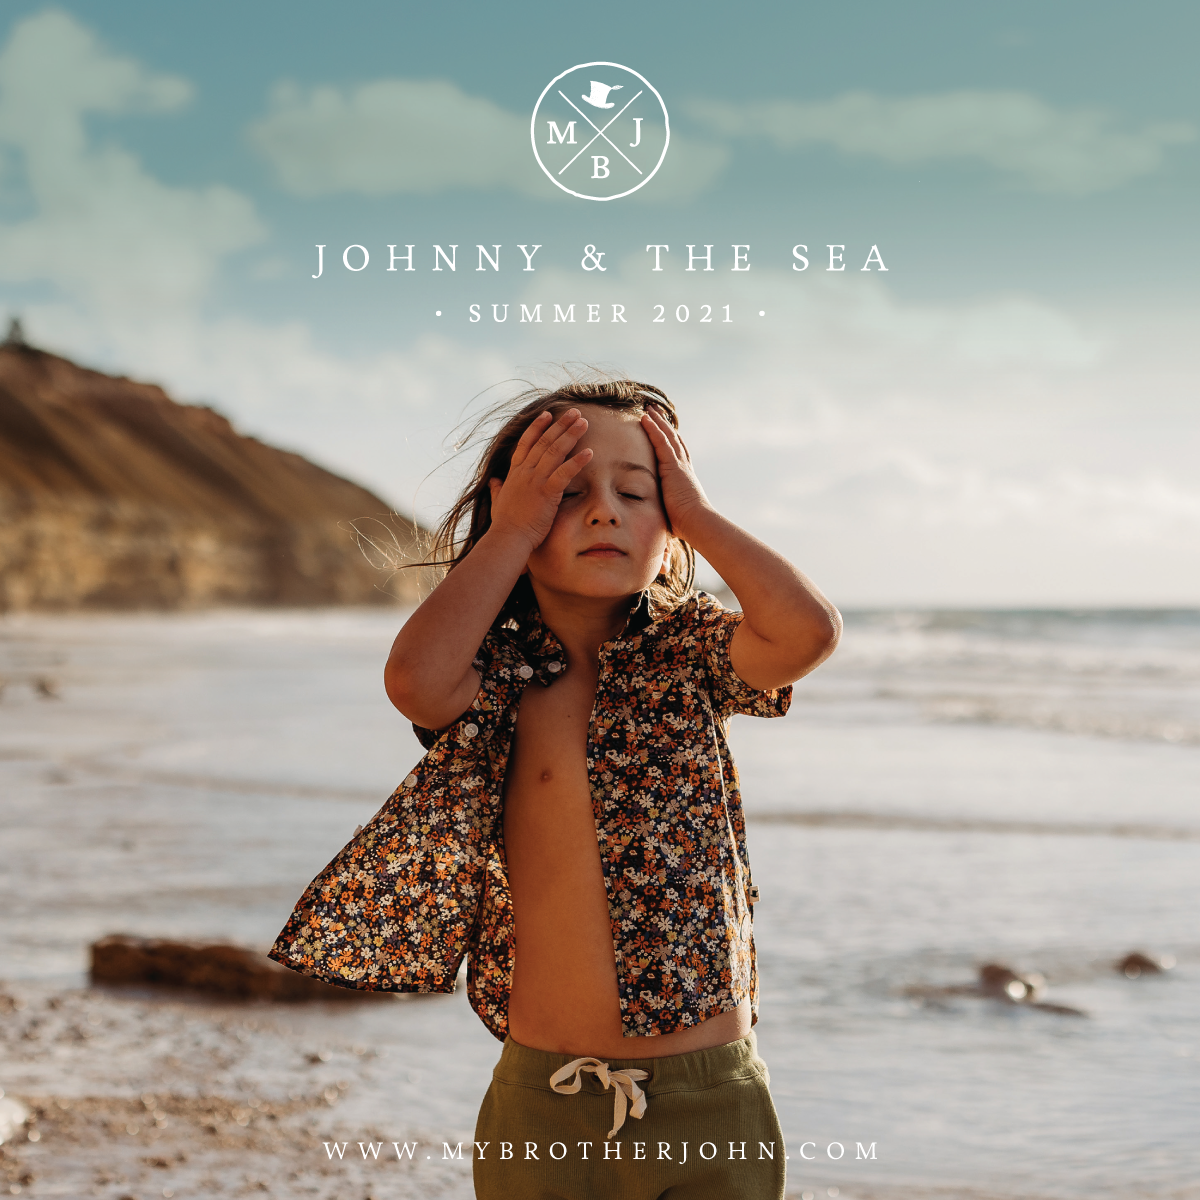 JOHNNY & THE SEA